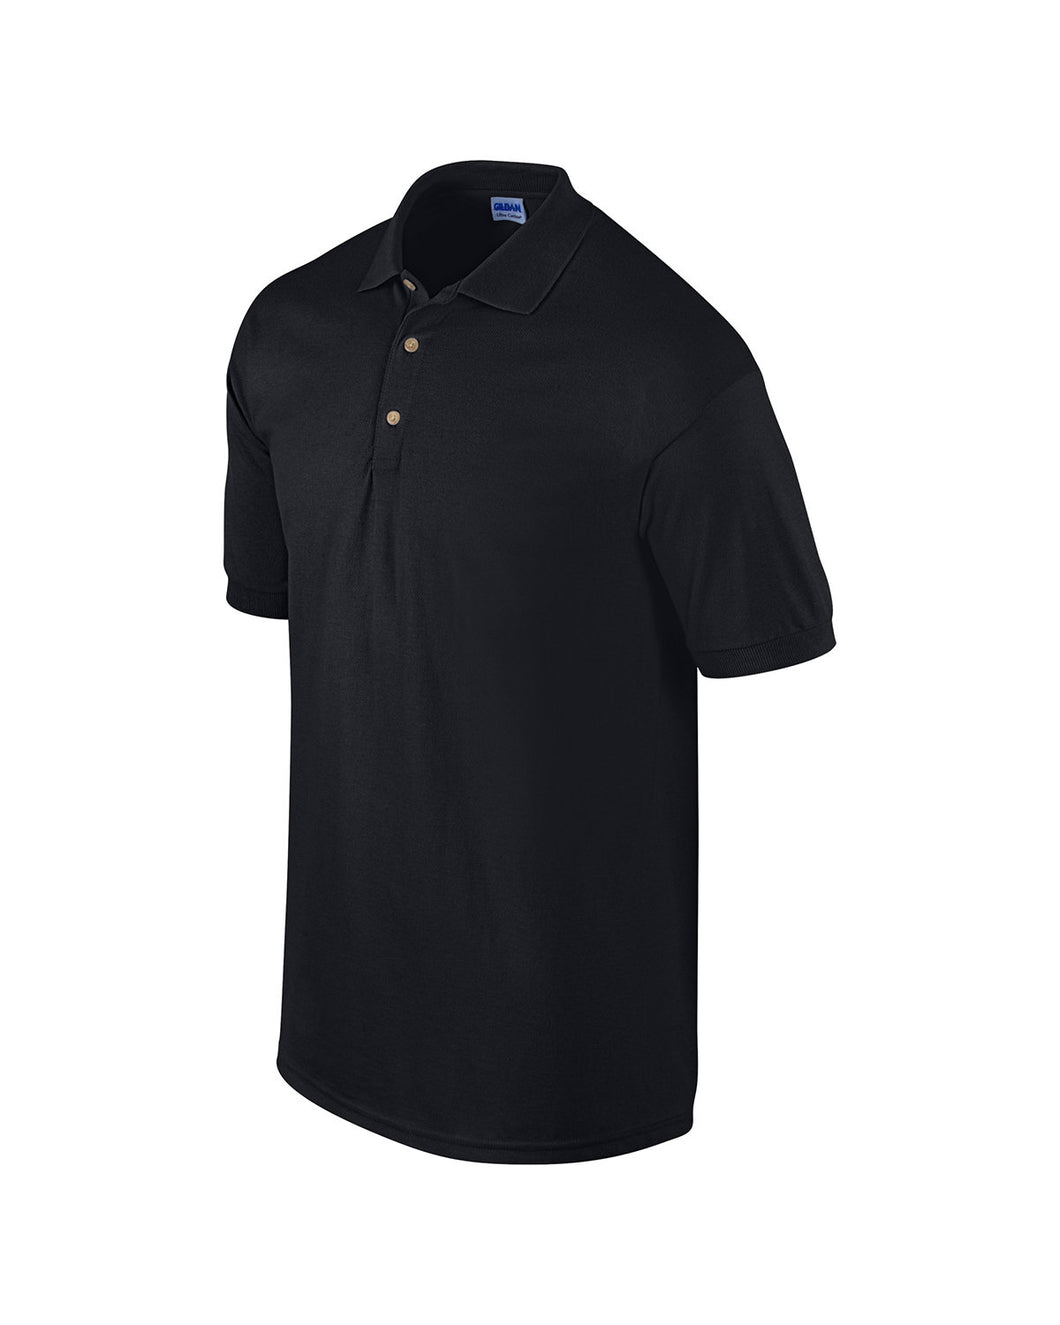 Custom Embroidered Polo Cotton Shirts, Uniform Shirts, School Shirts